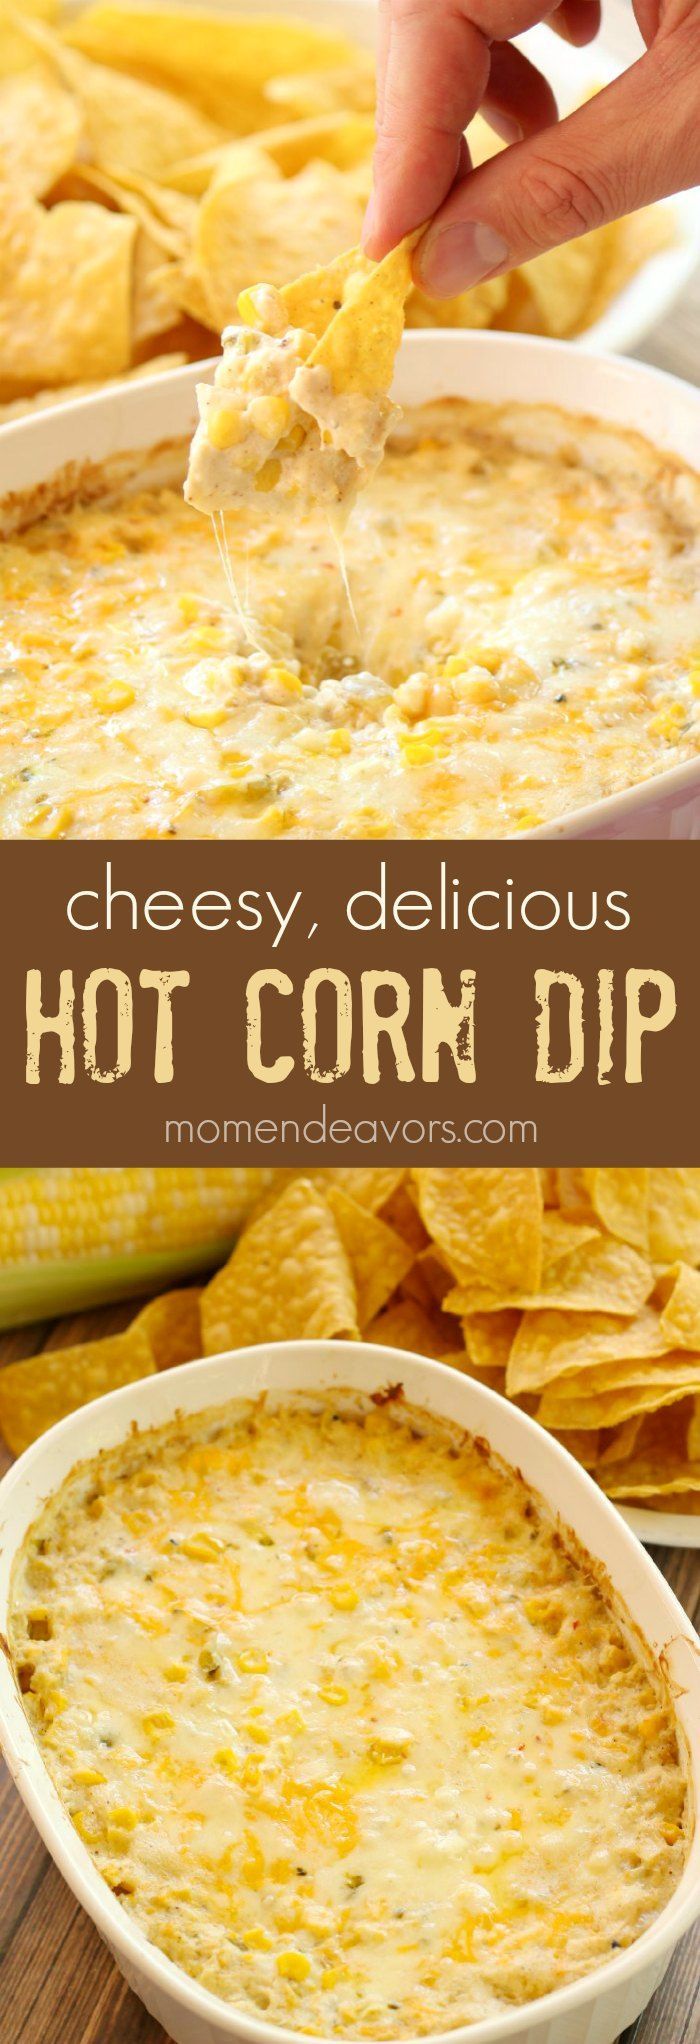 Cheesy Hot Corn Dip Recipe